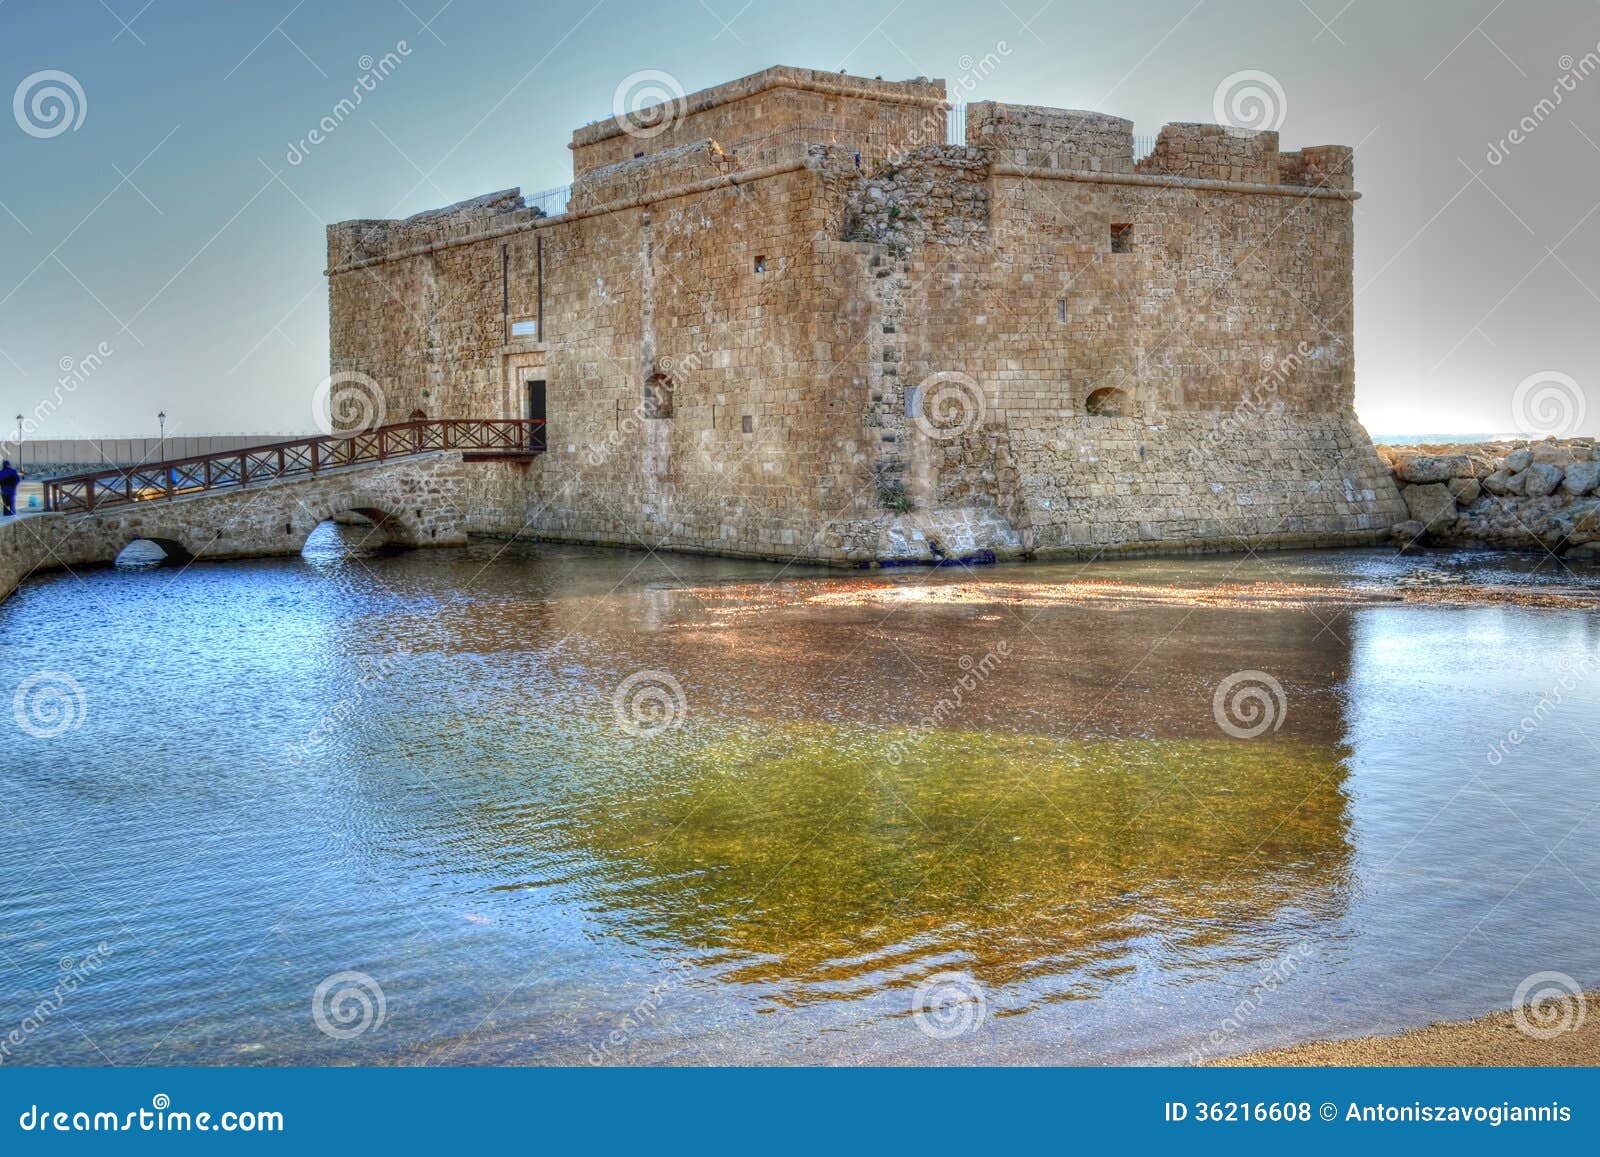 medieval castle of paphos